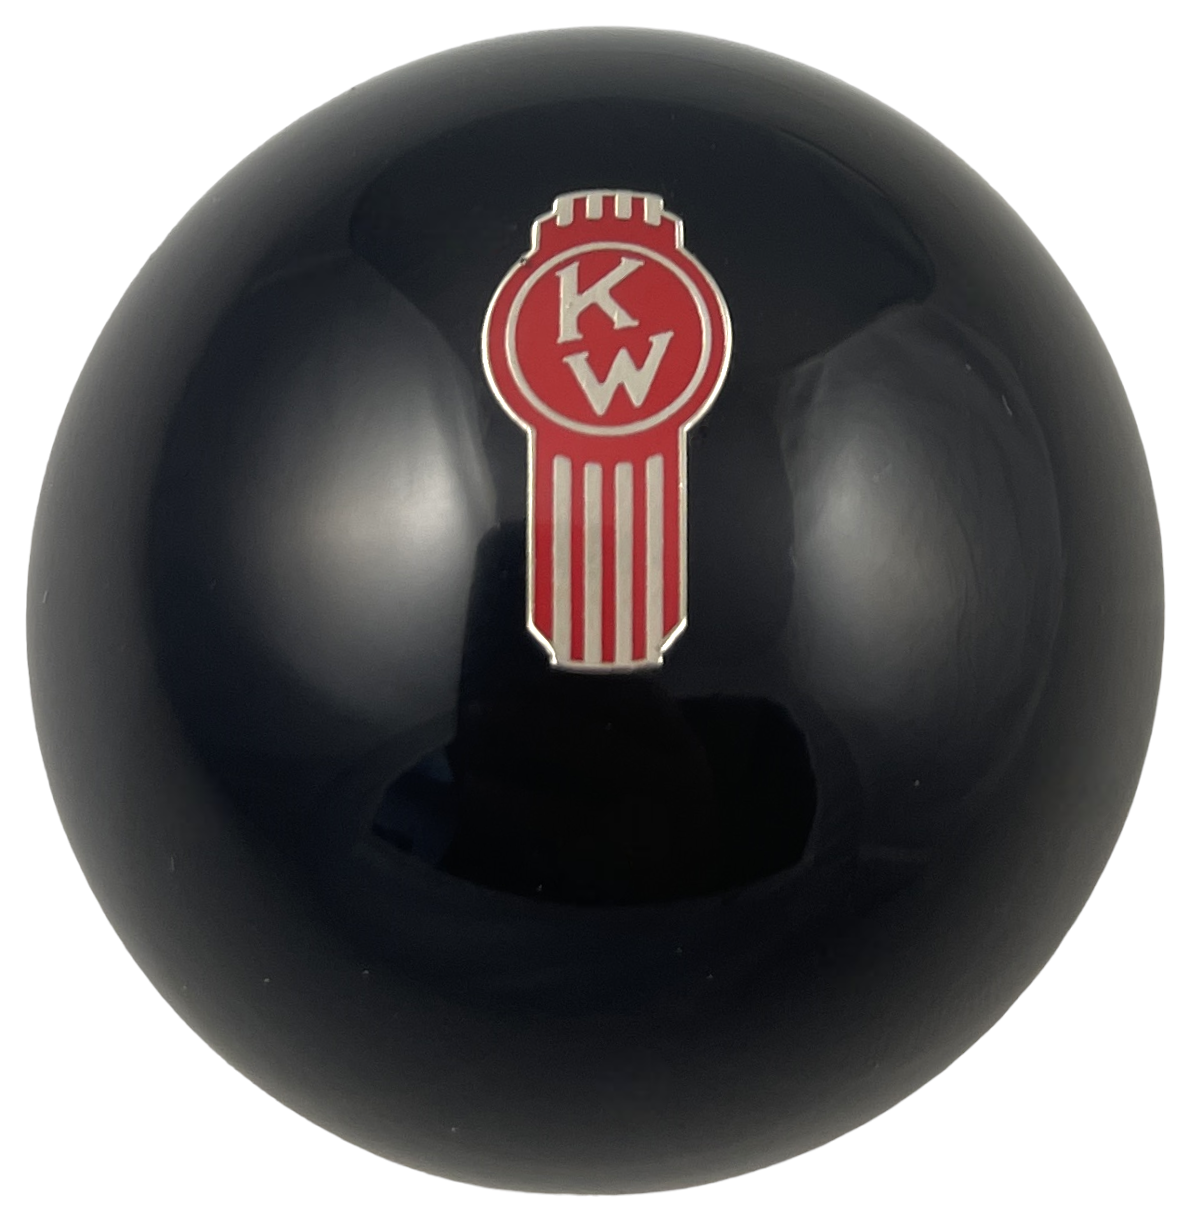 Image of Black Crooked Kenworth Brake Knob